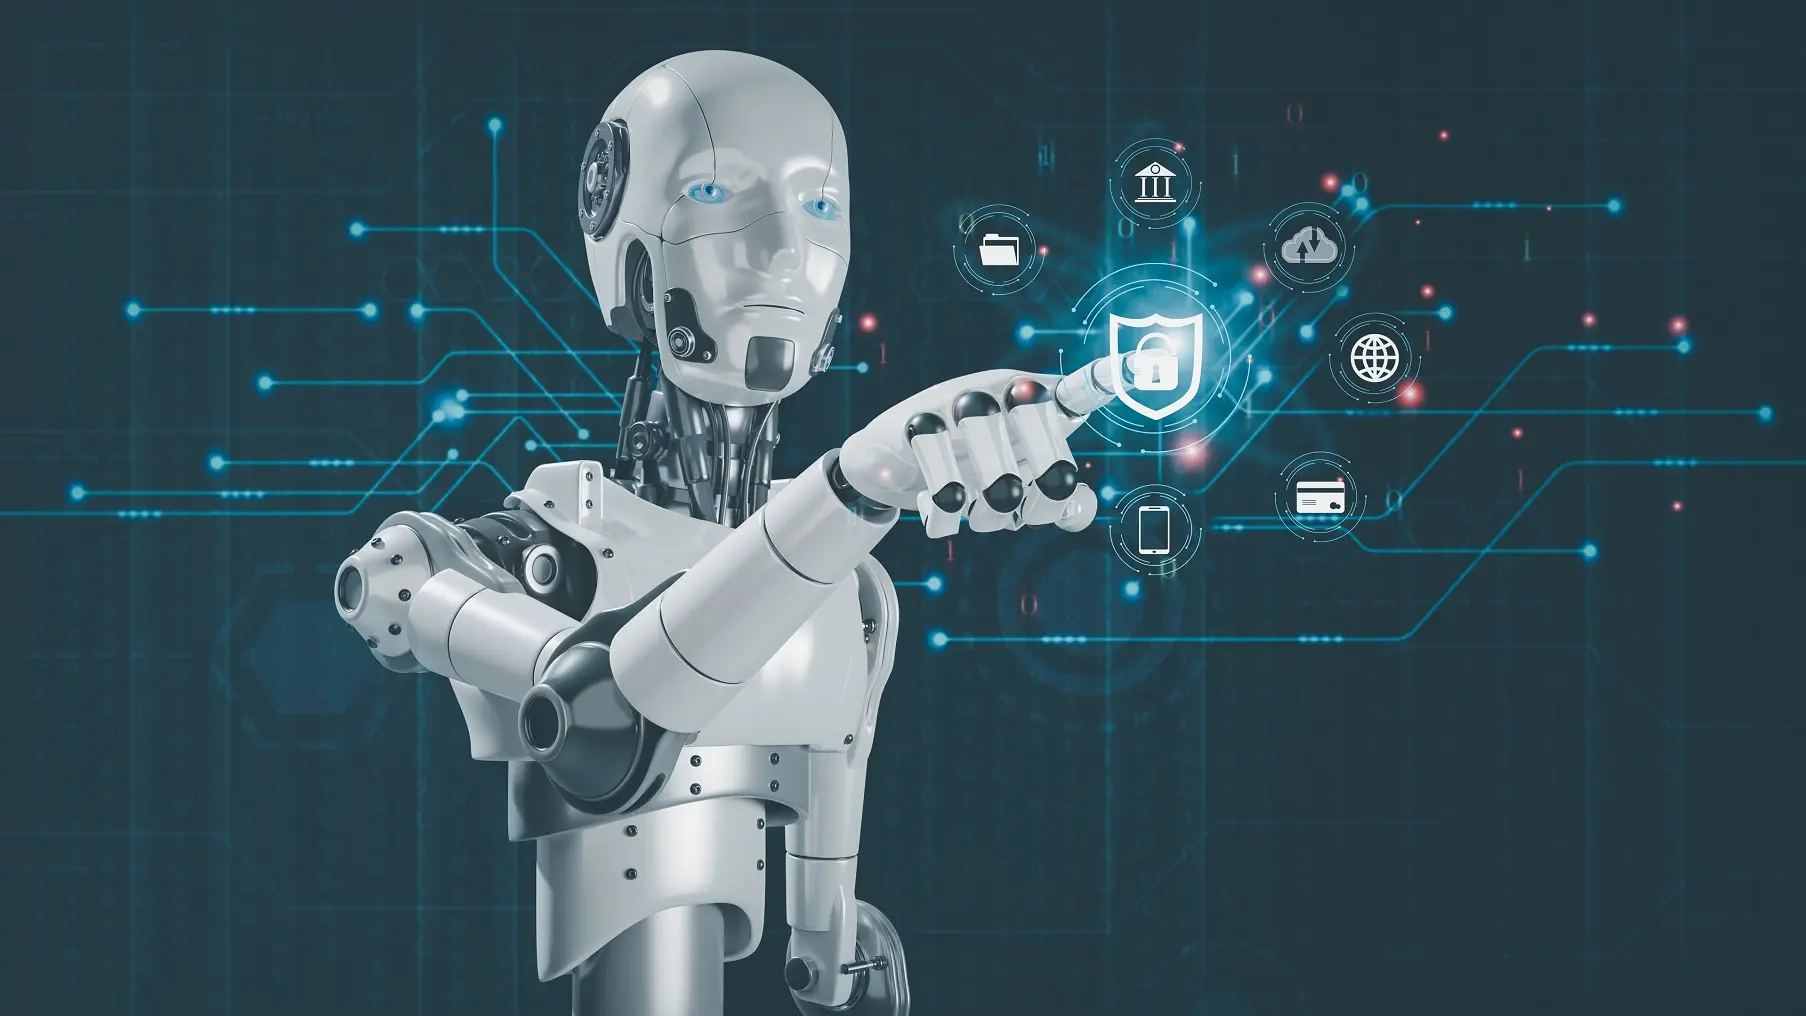 veštačka inteligencija, AI, robot, tehnologija - Shutterstock-65c23f3c7f90a.webp